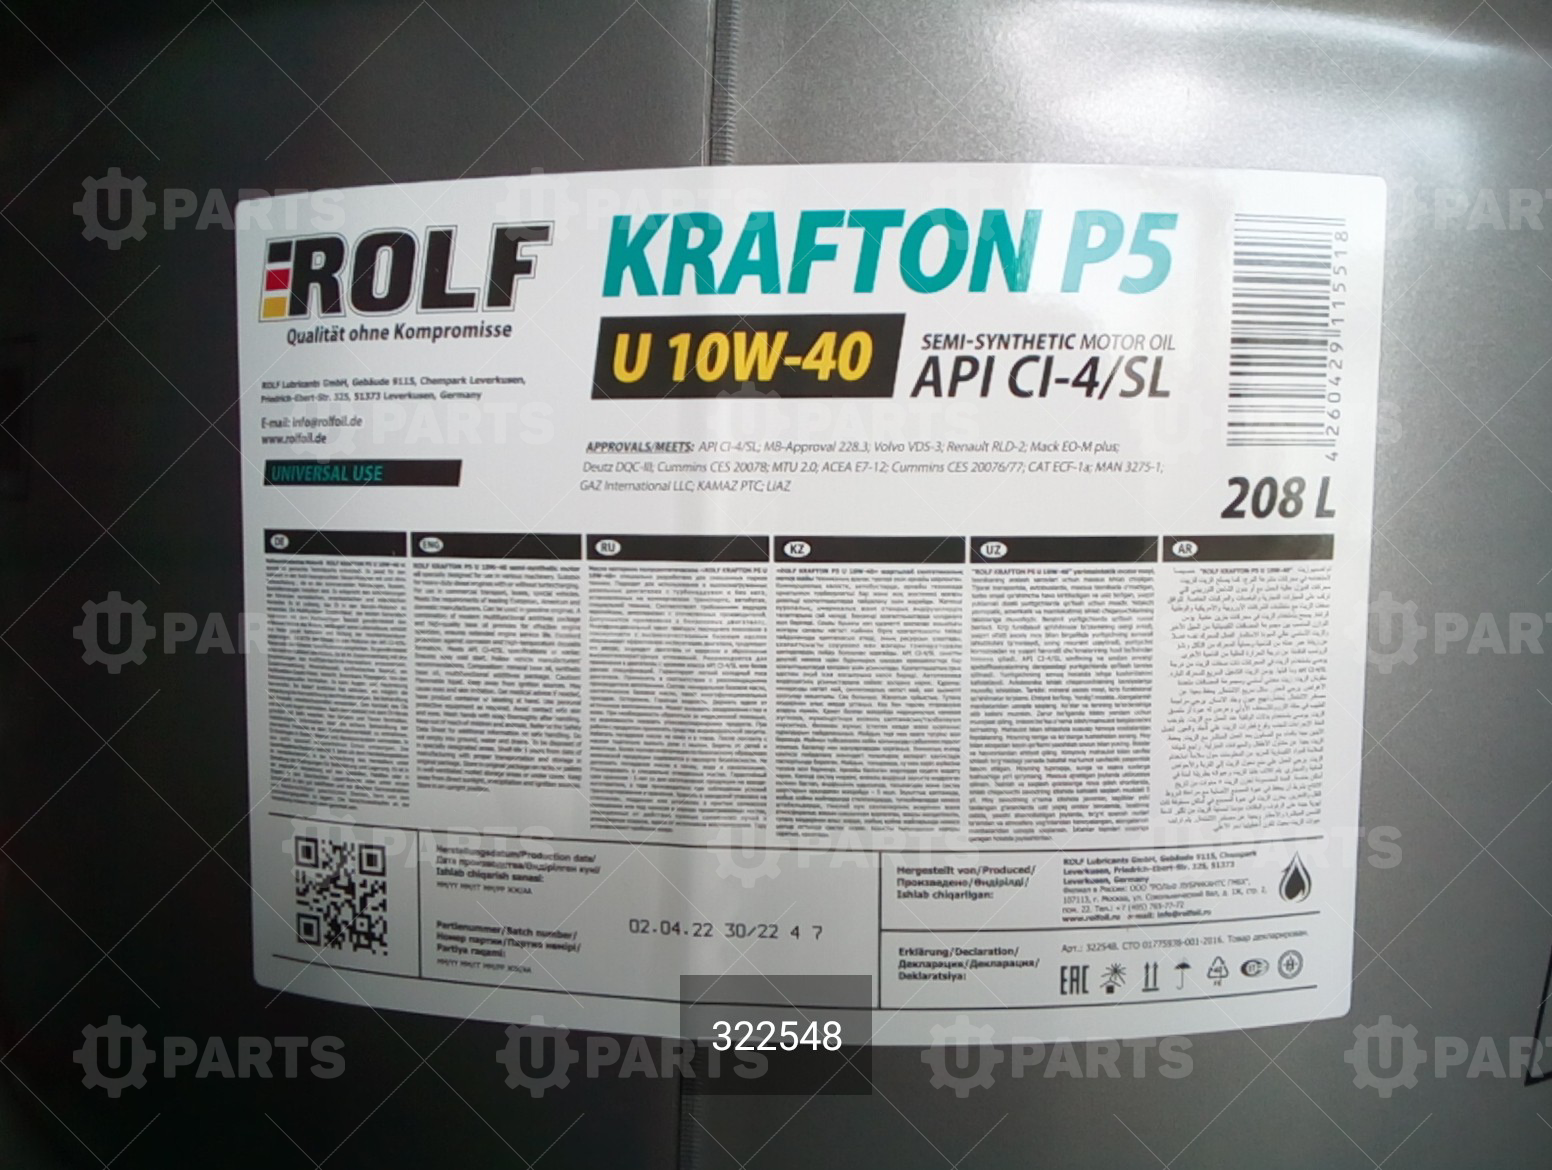 Rolf Krafton p5 10w 40. Rolf Krafton p5 u 10w-40 208л. Масло Rolf Krafton p5 u 10w-40 208л. Rolf Krafton p5 m 10w-40.